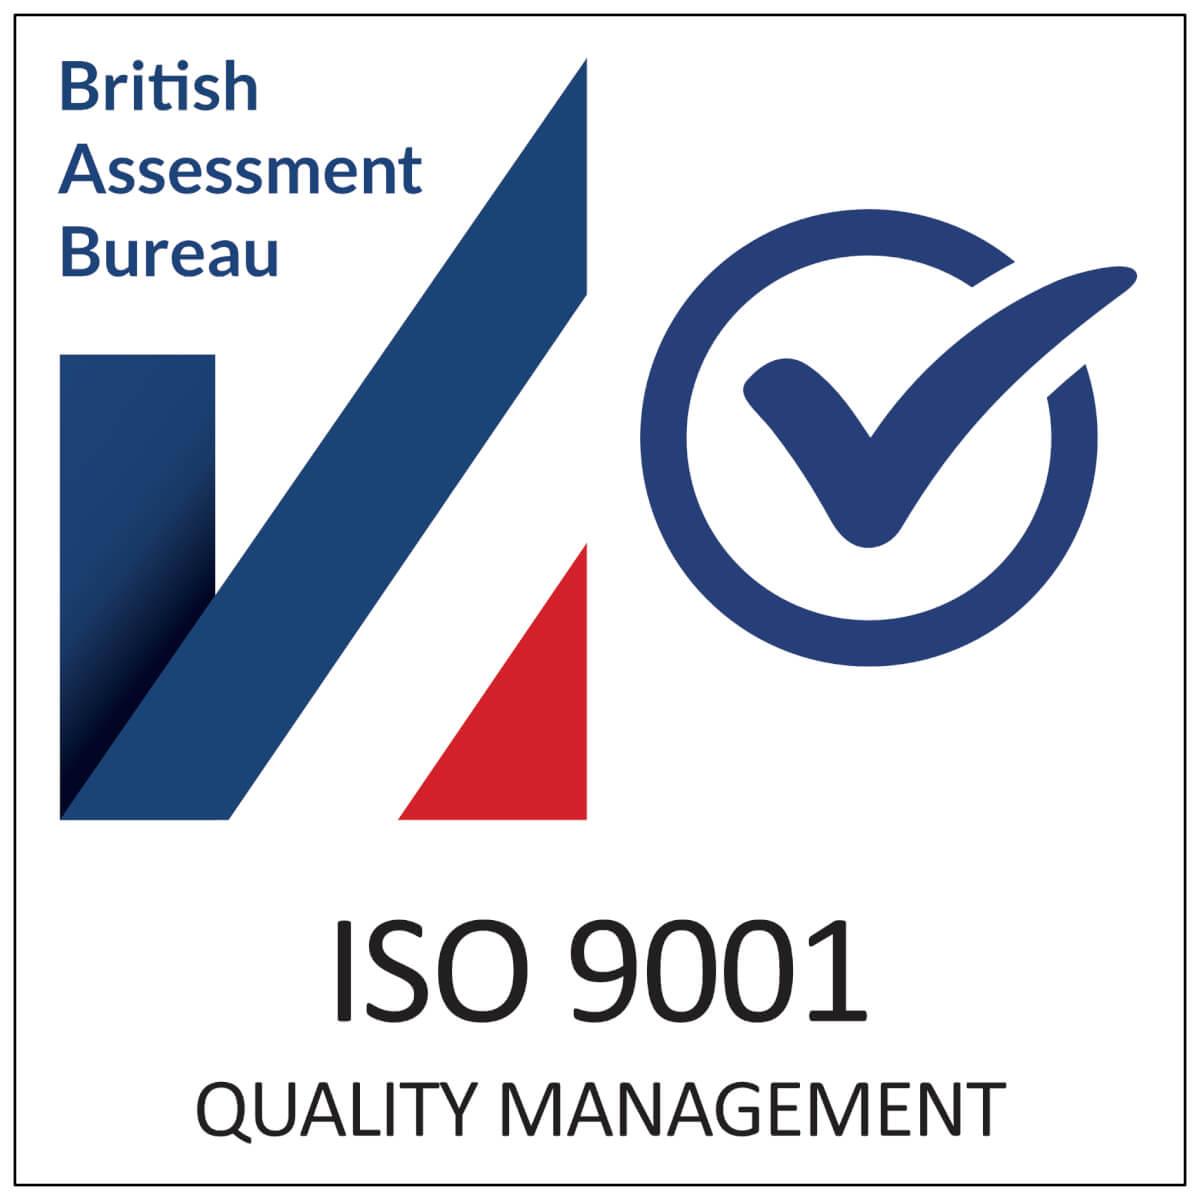 ISO 9001 Logo - Certification Badges. British